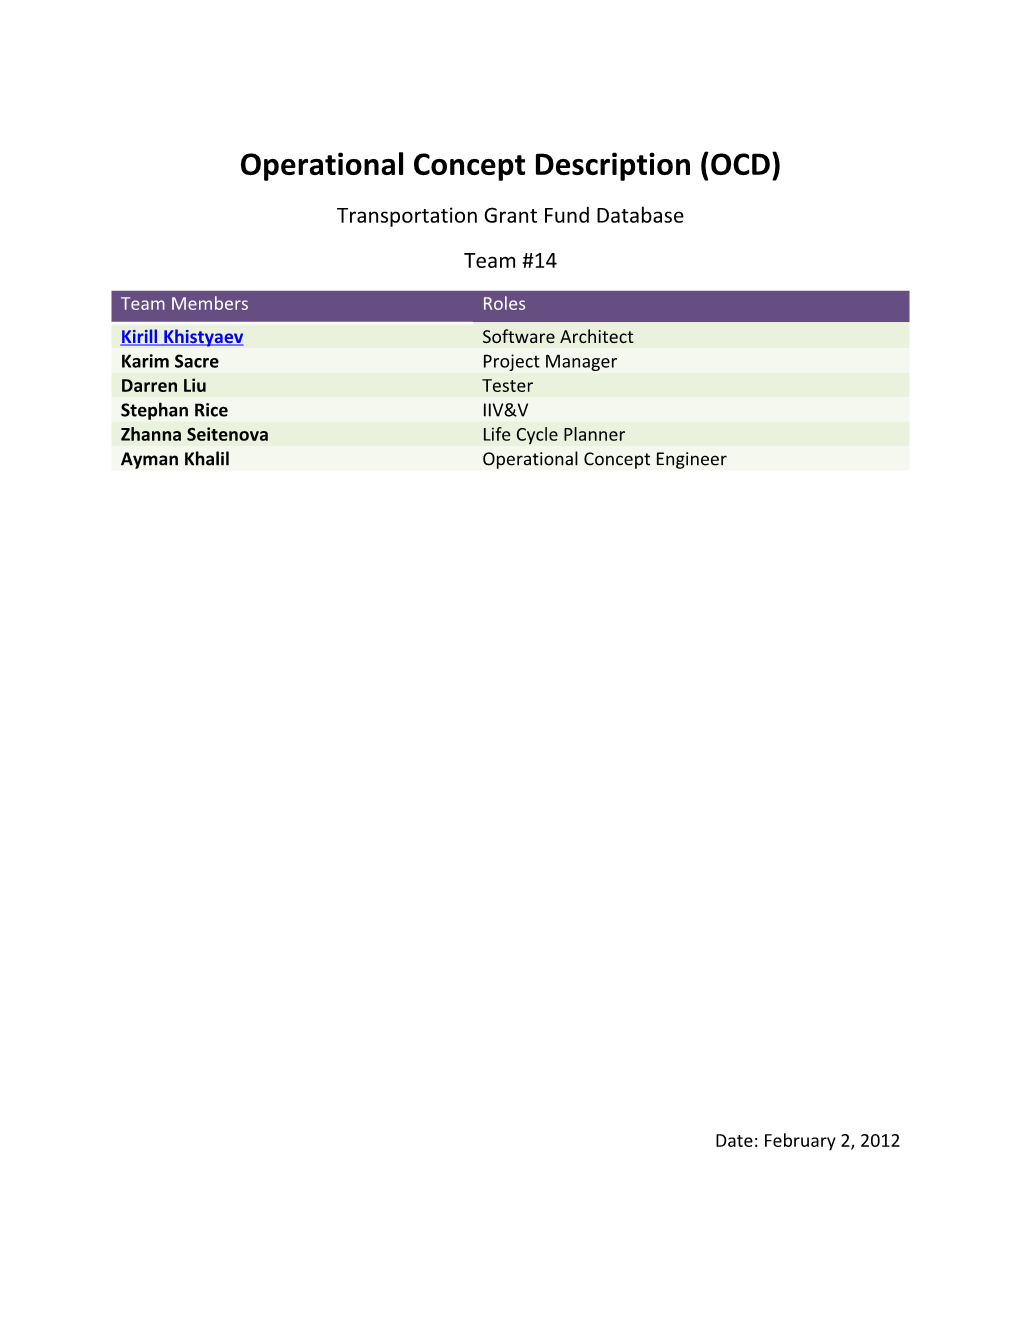 Operational Concept Description (OCD) Version 4.0